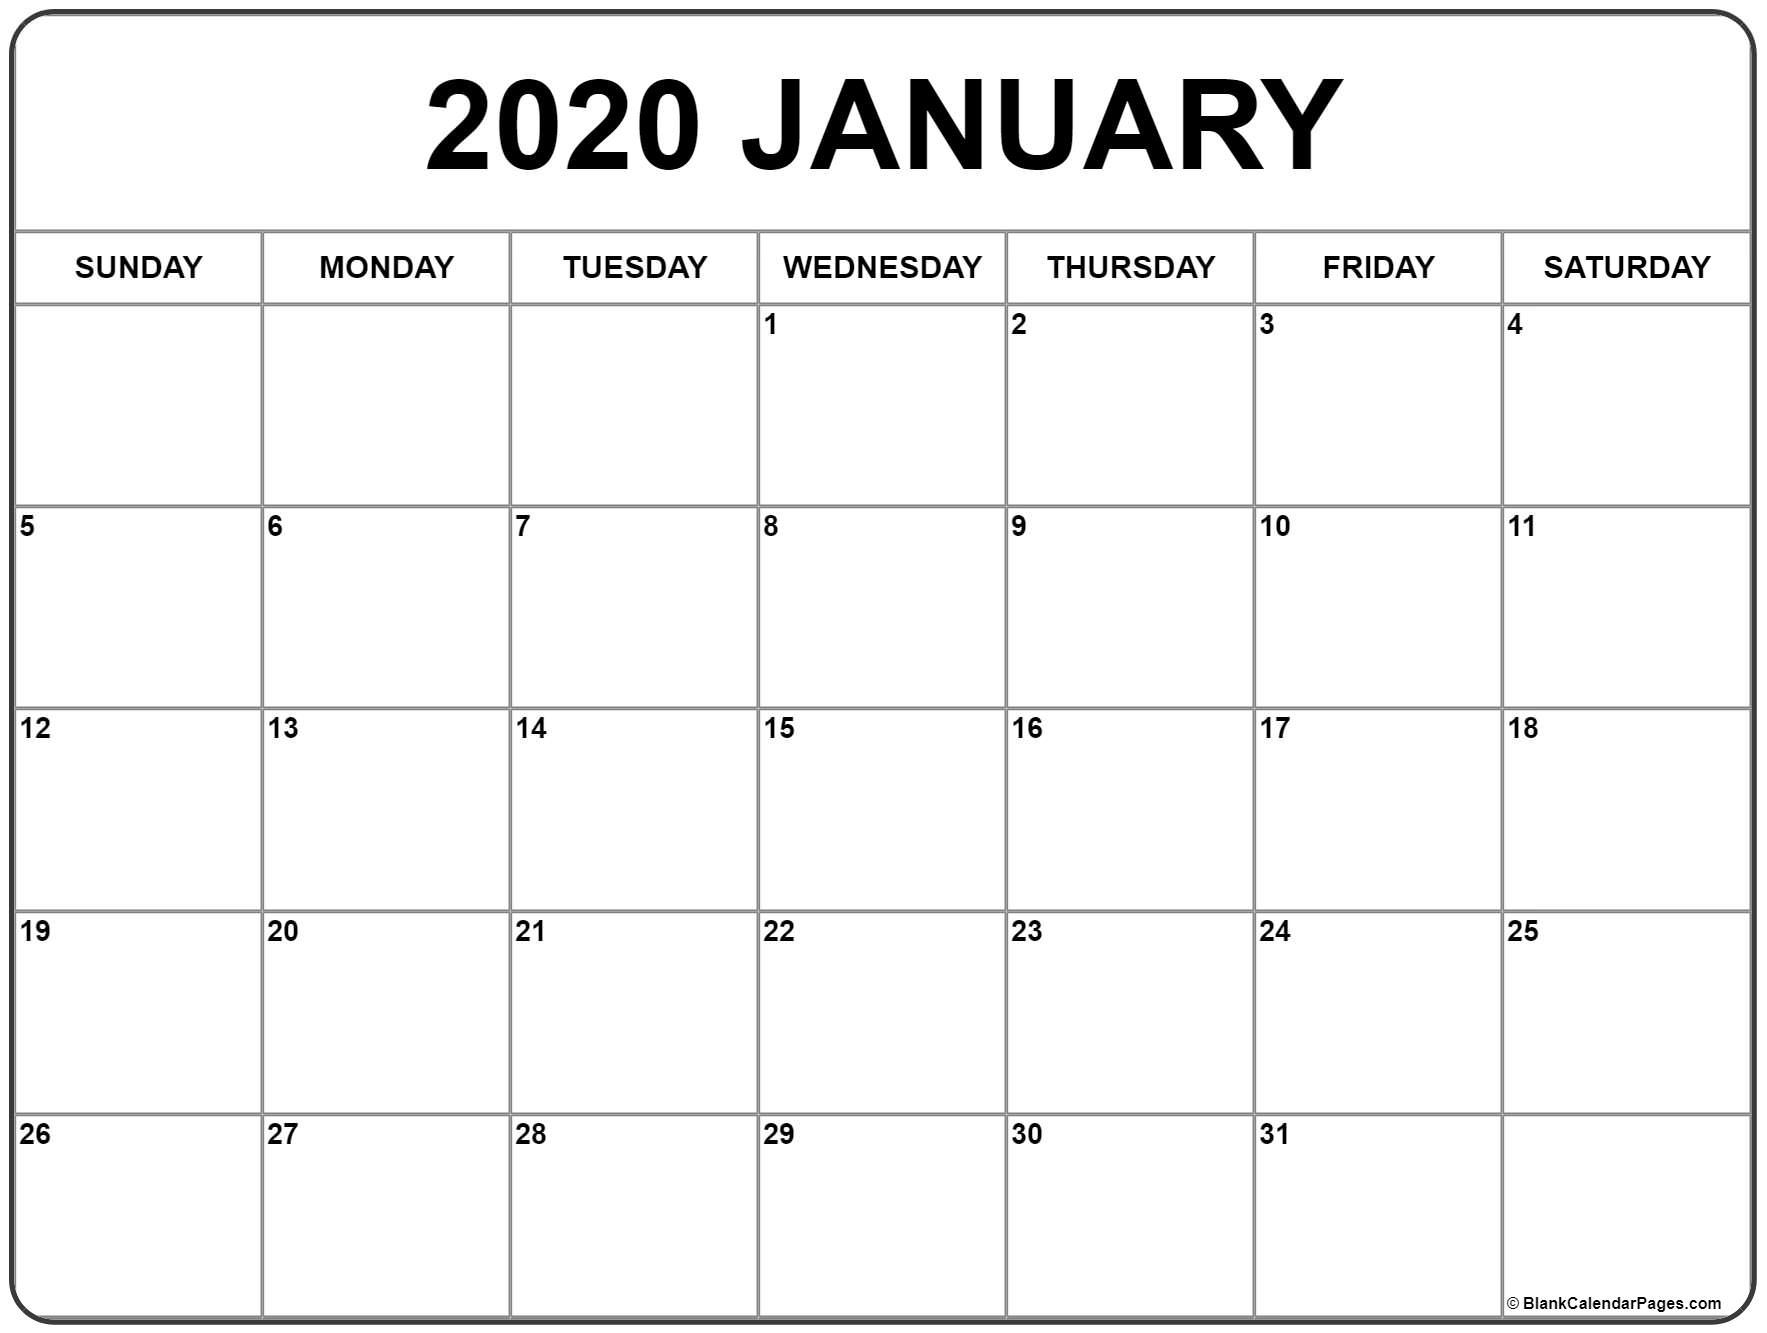 January 2020 Calendar | Free Printable Monthly Calendars for Printable Monthly Calendar 2020 Free